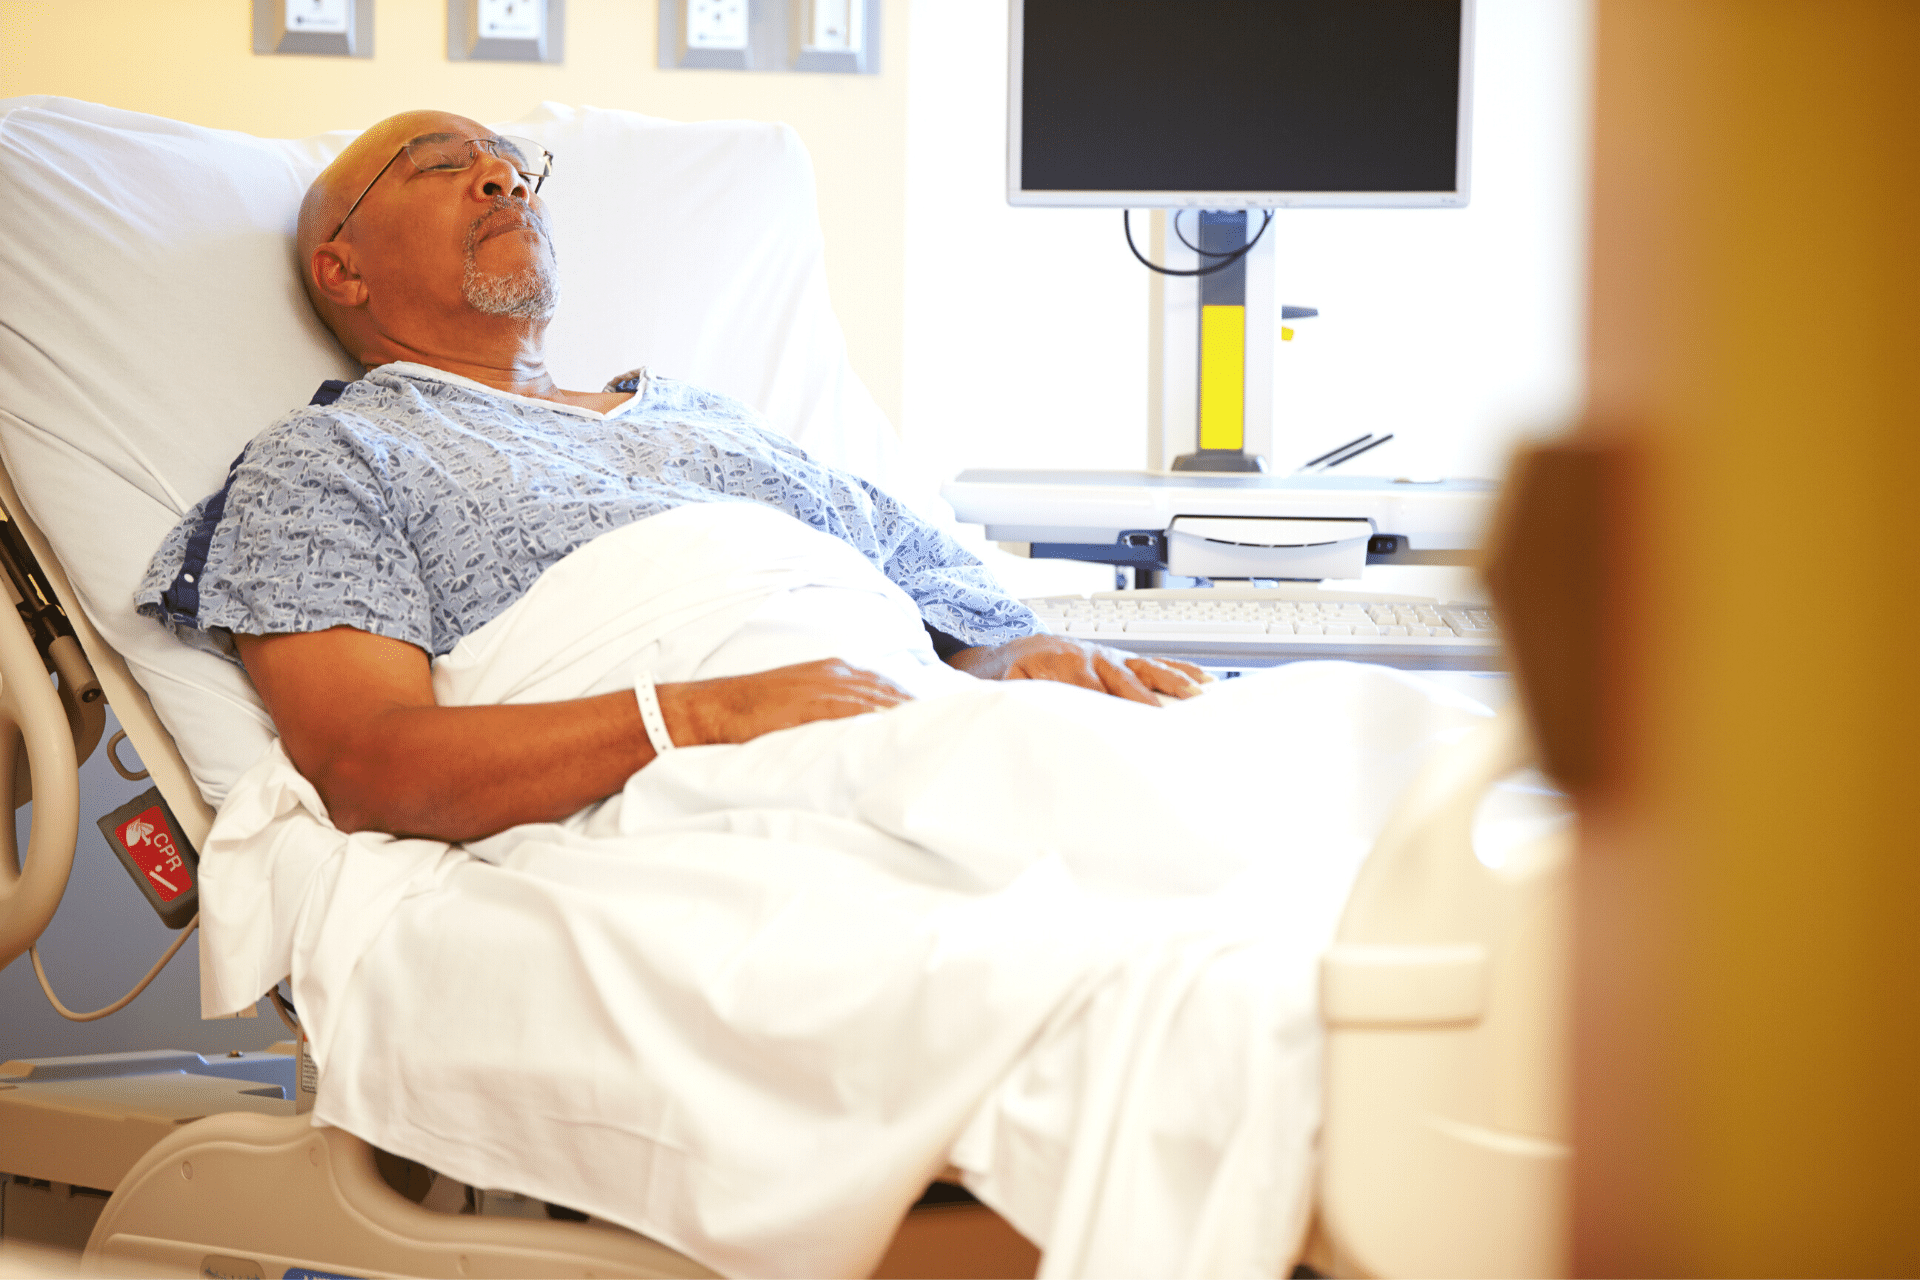 An elderly man in a hospital bed.